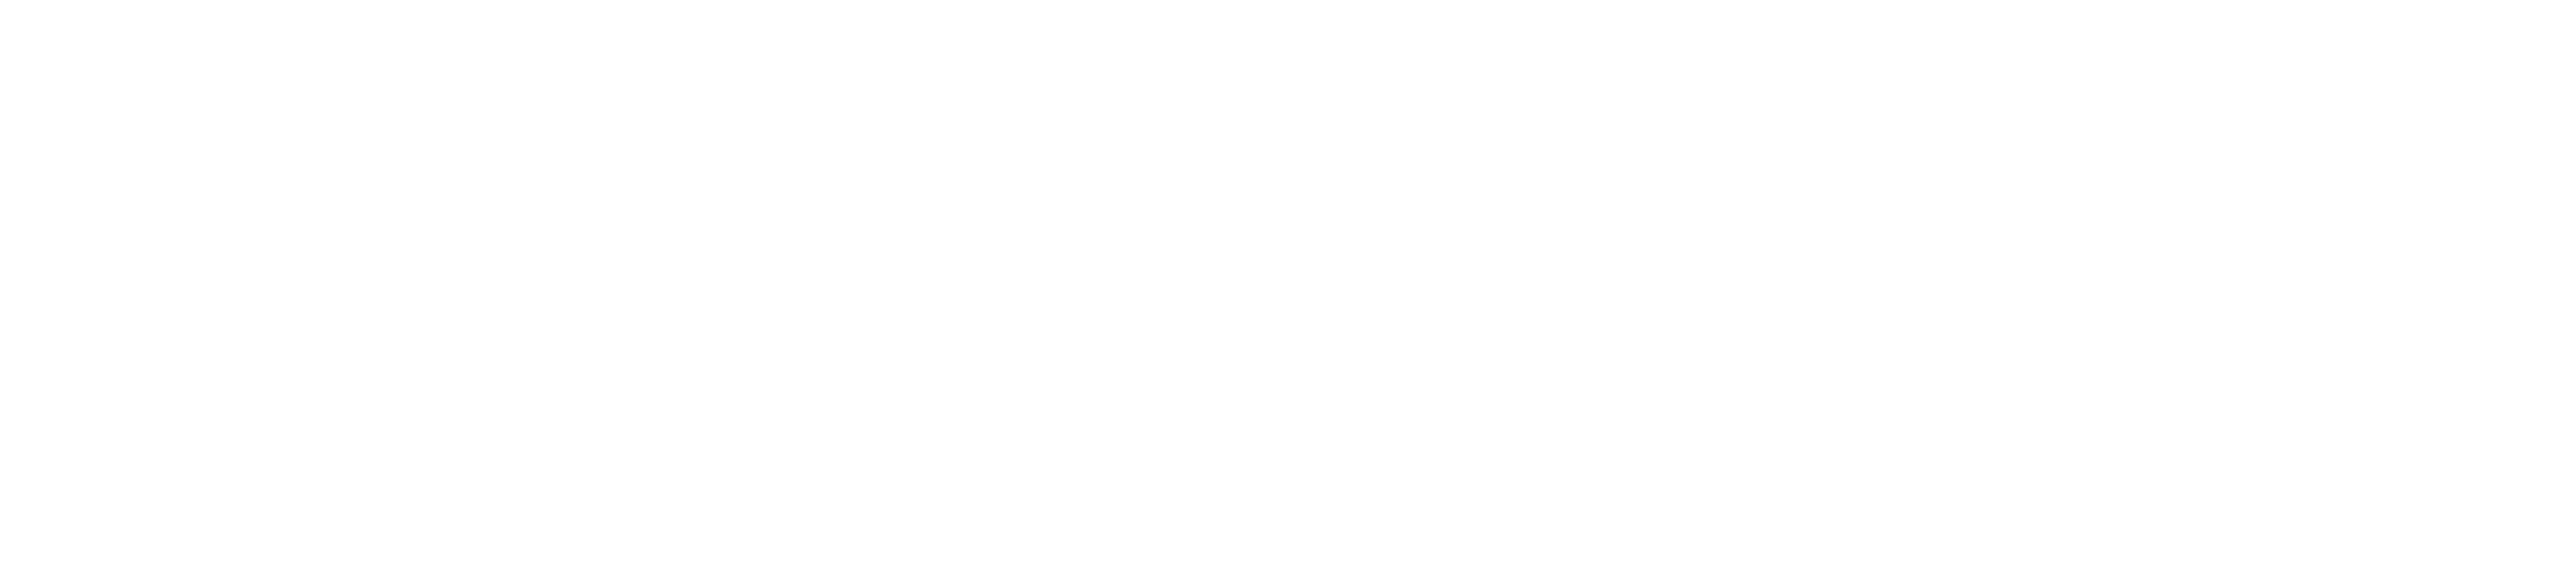 Boneyard Arts Festival